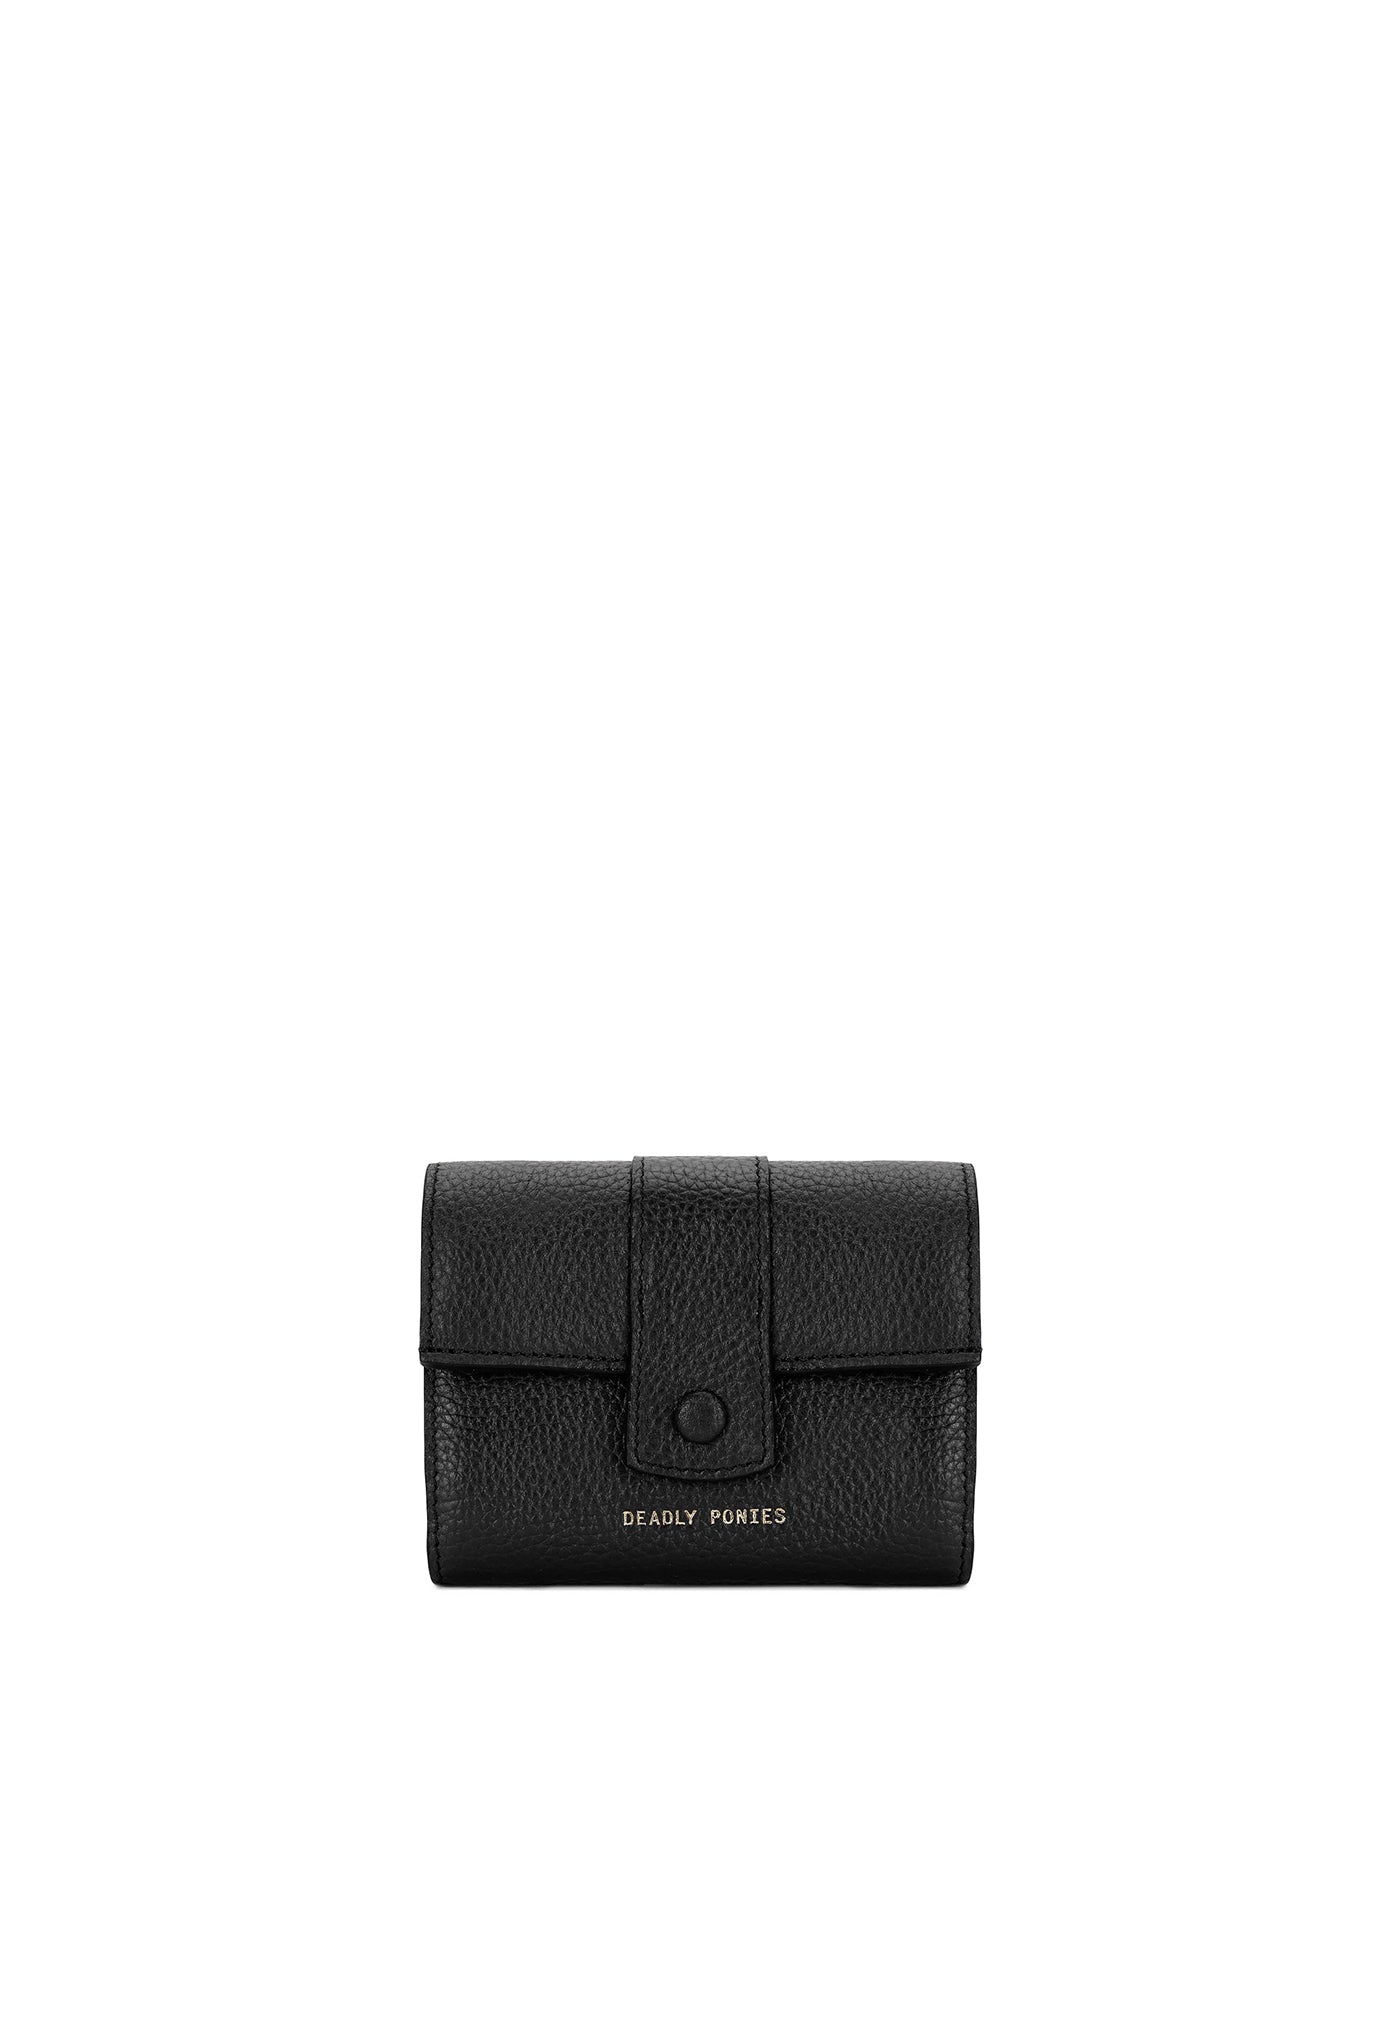 Snap Wallet - Black sold by Angel Divine